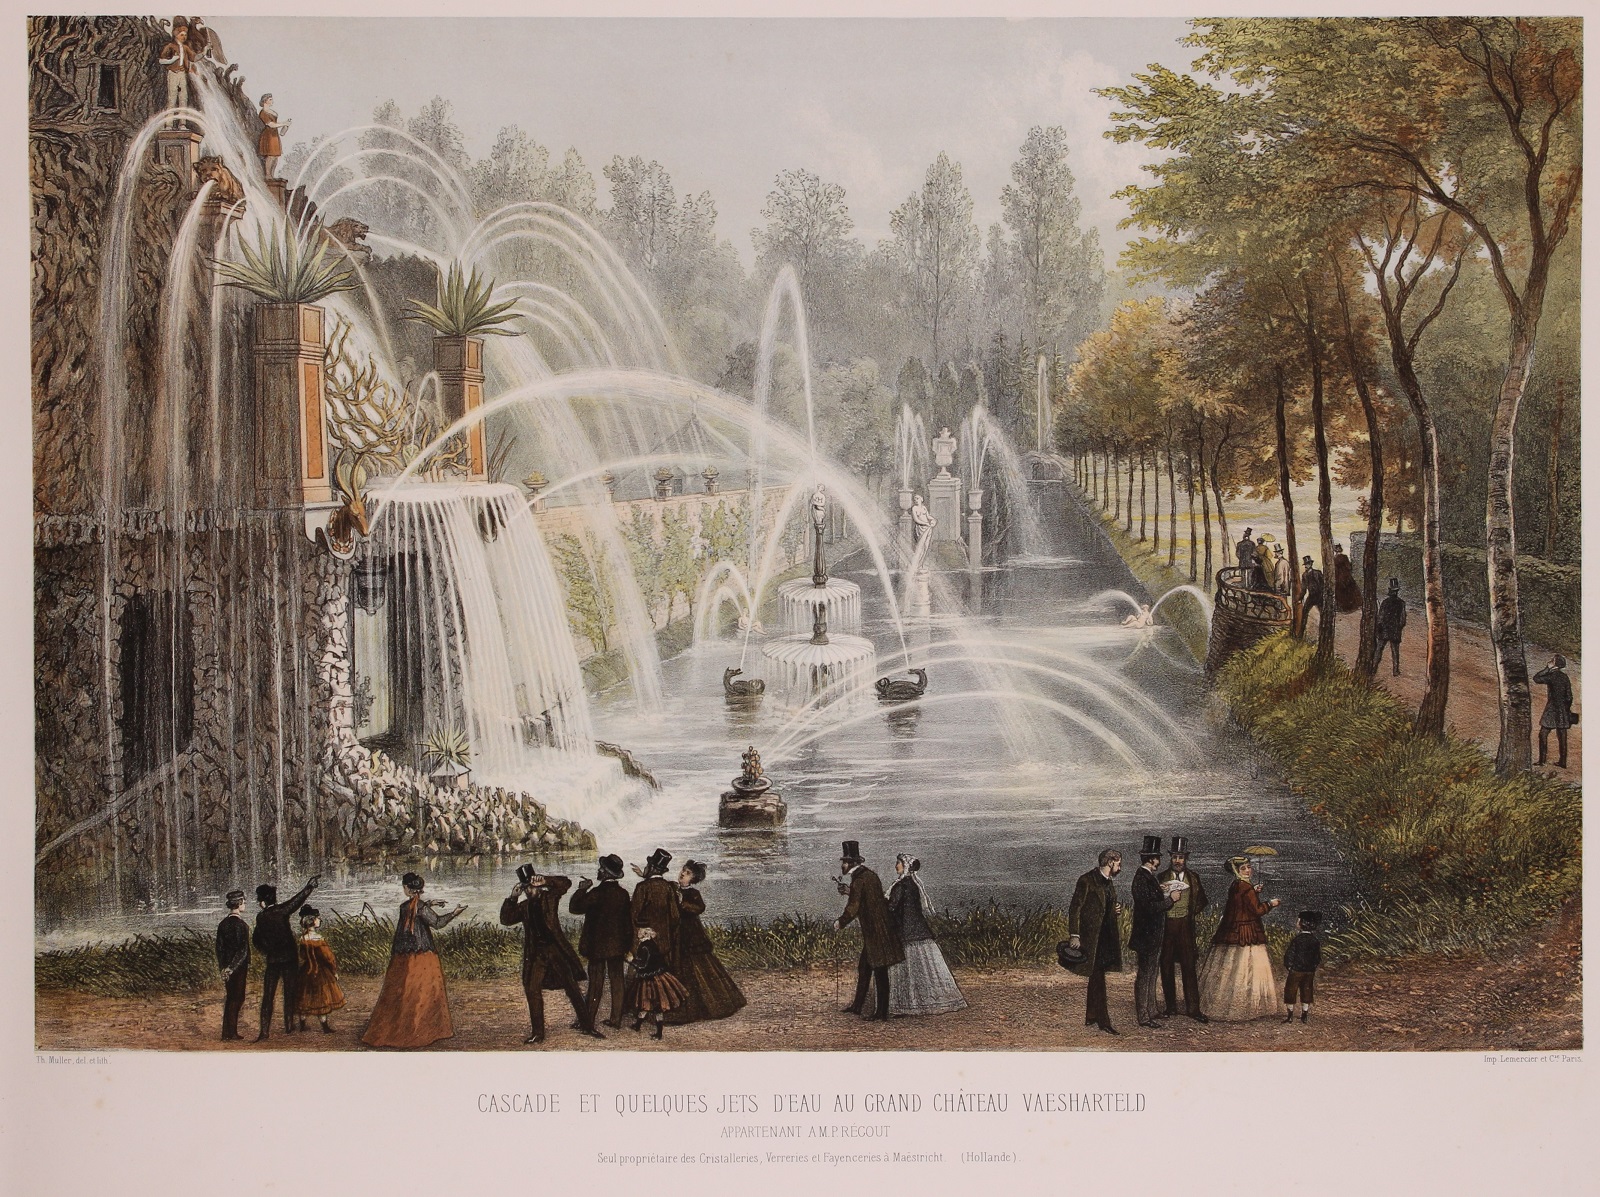  - Park Chateau Vaeshartelt  - Theodore Mller + Lemercier, 1863